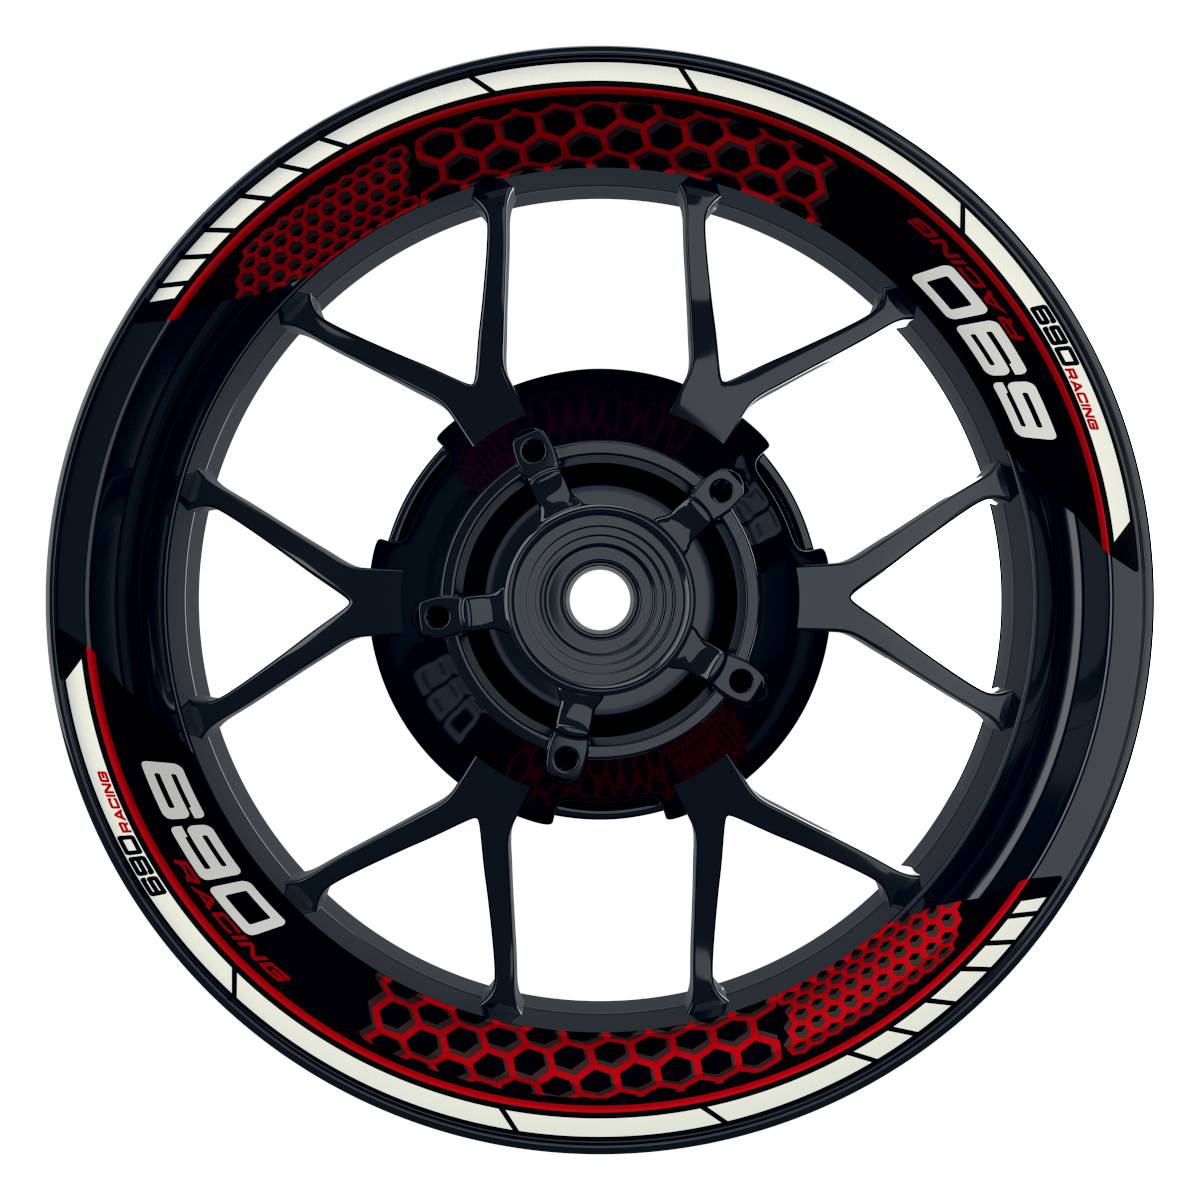 KTM Racing 690 Hexagon schwarz rot Frontansicht